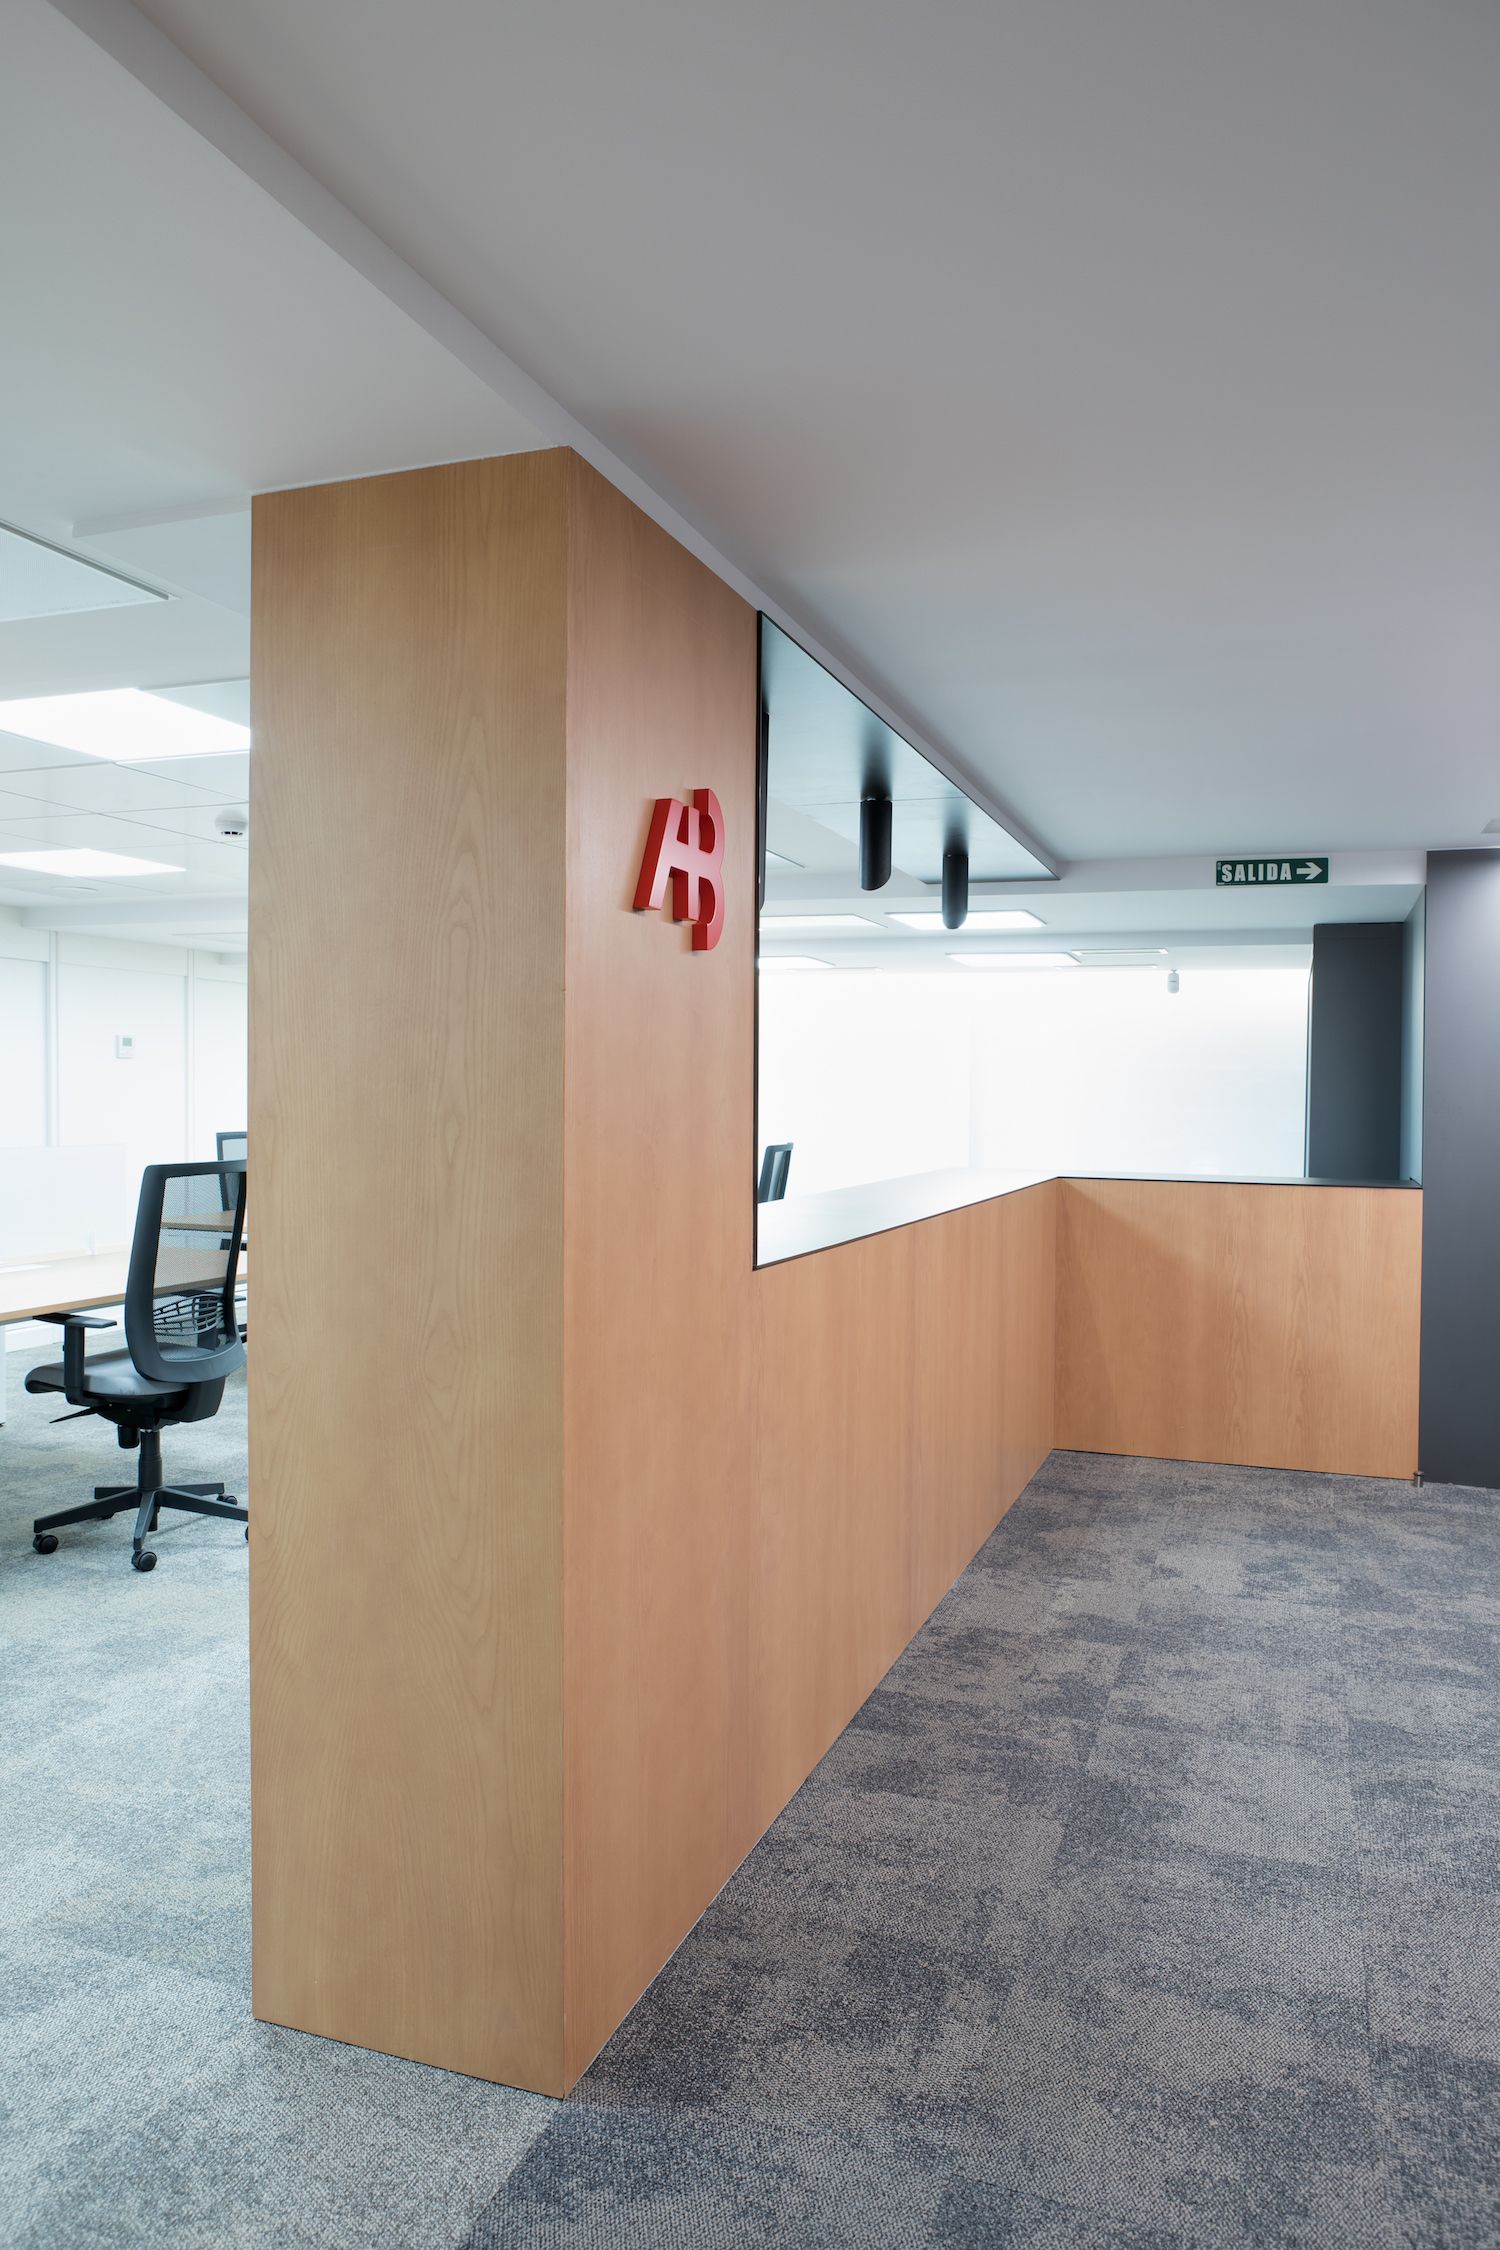 Diseño integral interiorismo reforma oficinas centrales consultora Arnaut & Iberbrokers | Perspectiva Moma